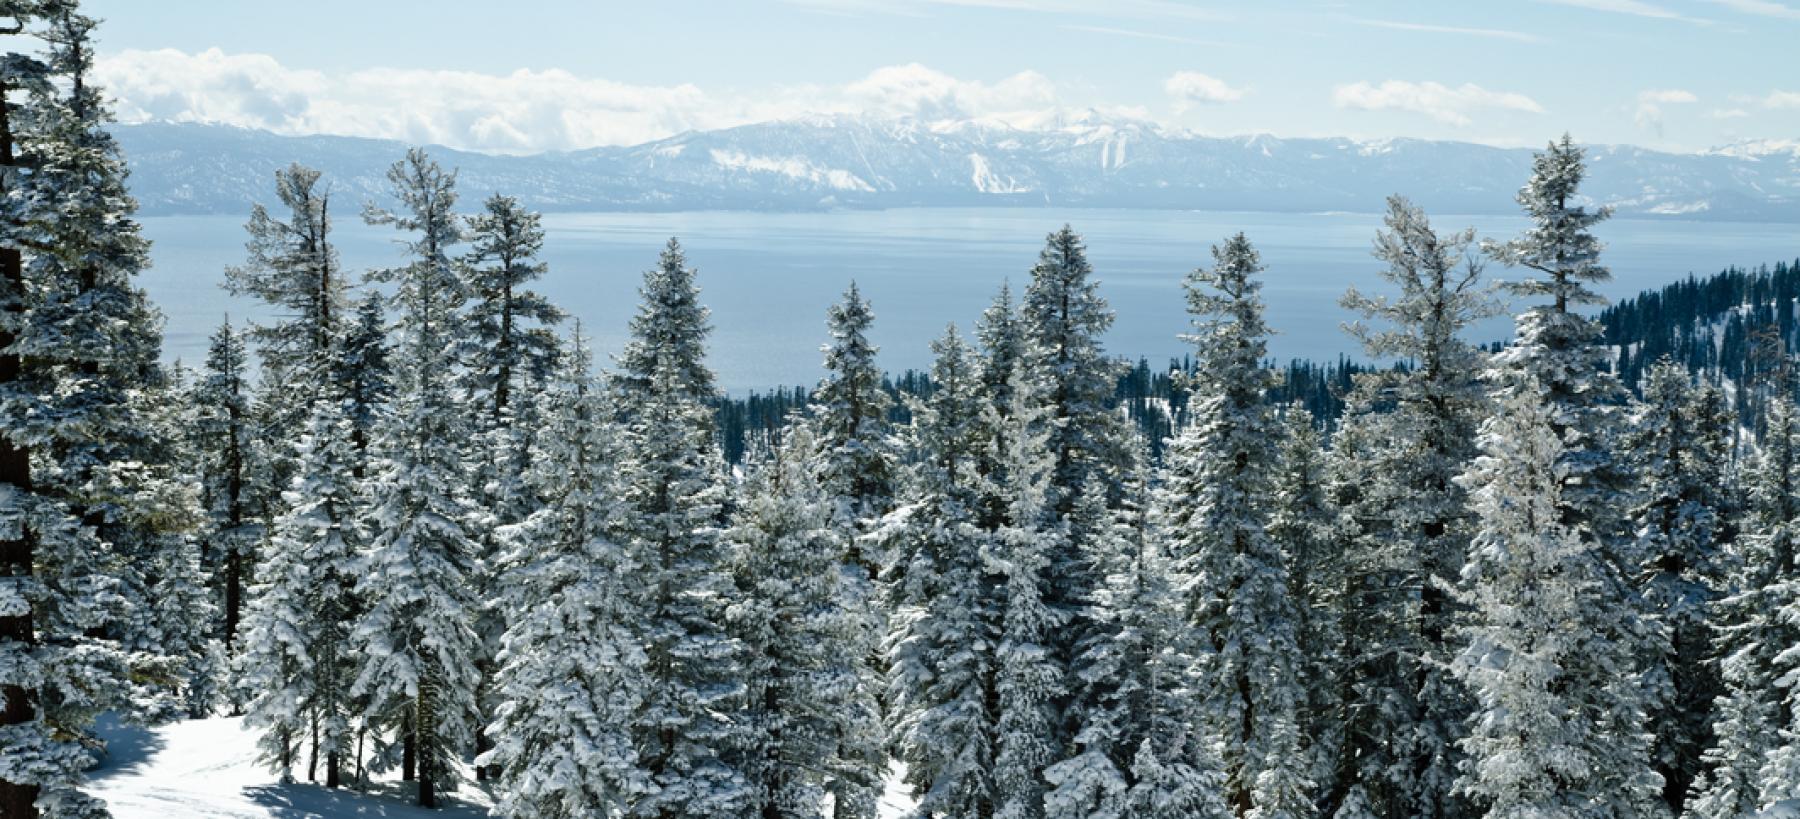 lake tahoe in winter